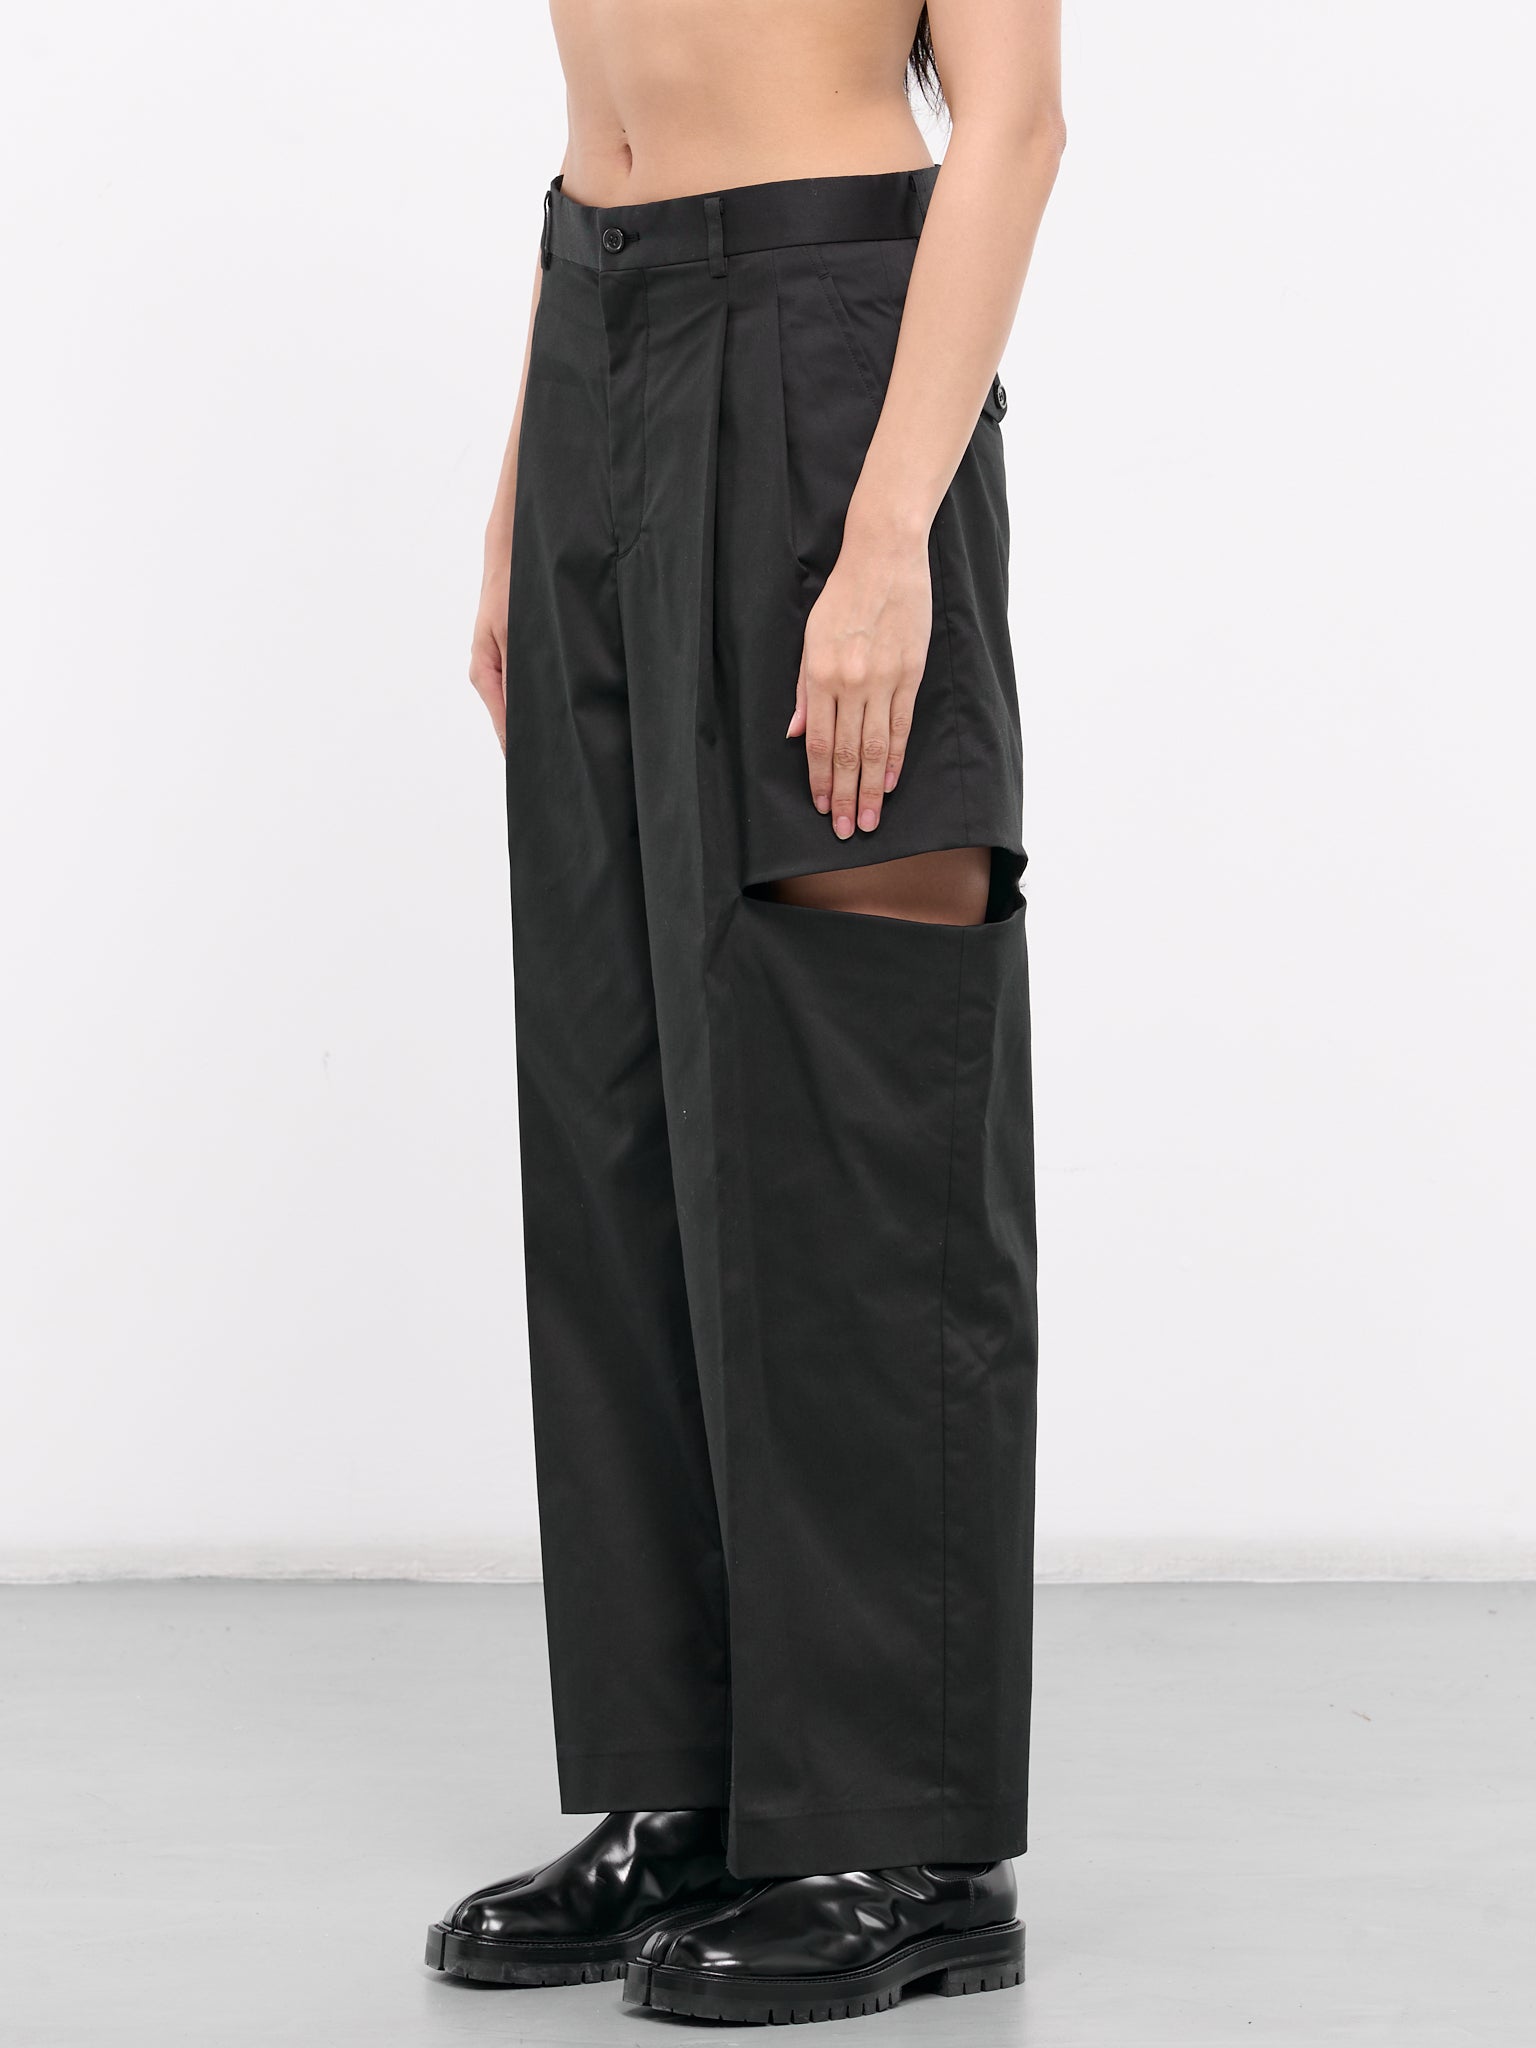 Cut-Out Trousers (3M-P006-051-BLACK)